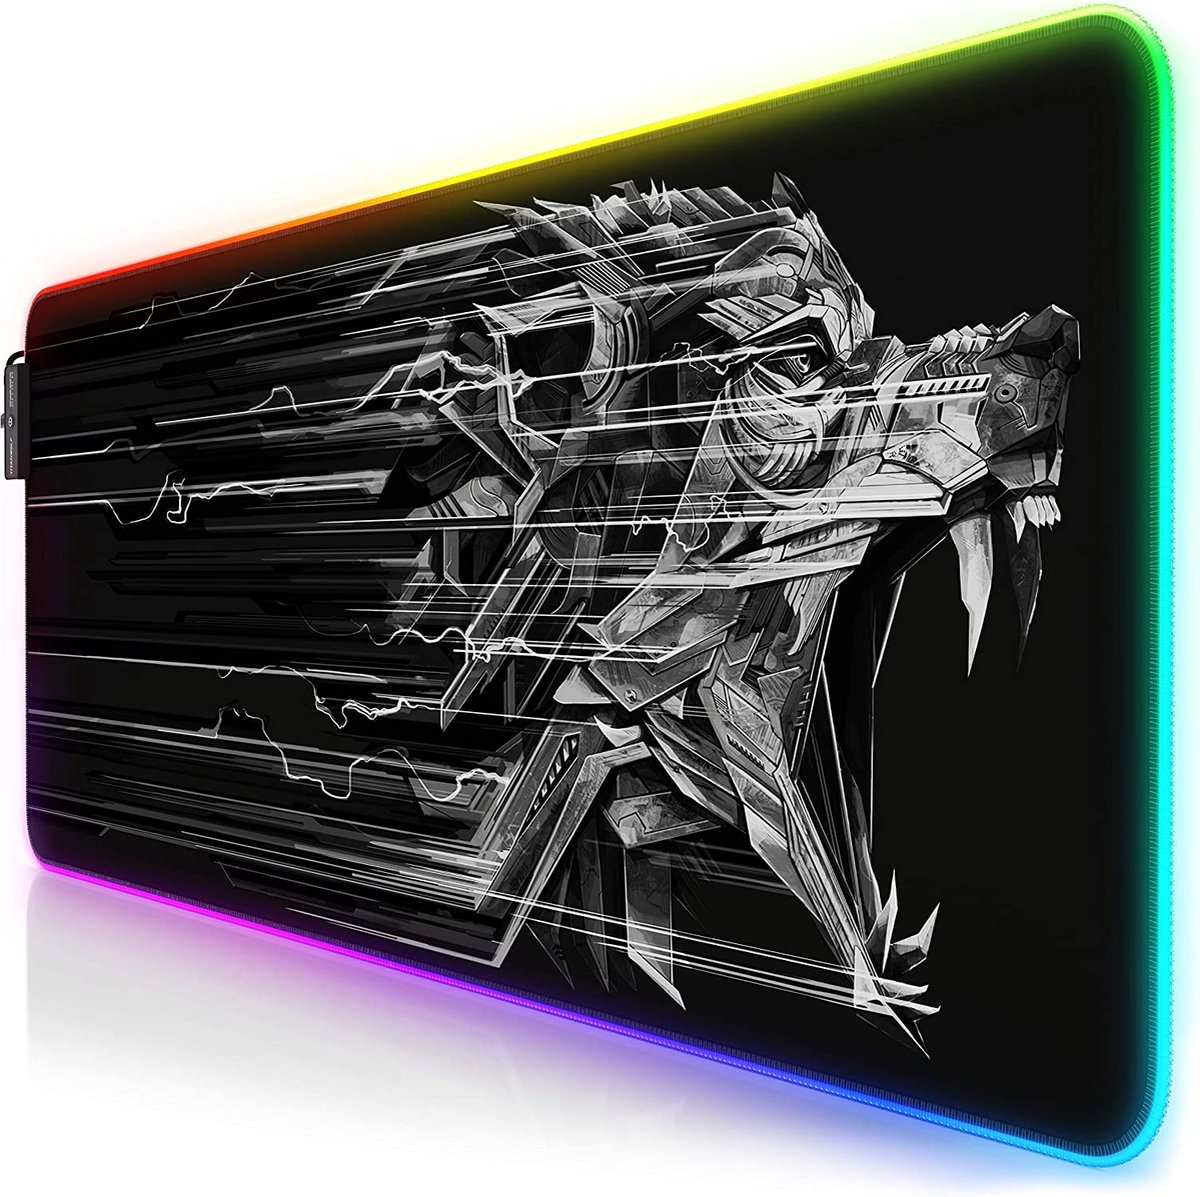 Titanwolf - RGB gaming muismat - LED bureauonderlegger - 800x300 mm - XXL muismat - LED multicolor - 11 verlichtingsmodi - 7 LED kleuren plus 4 effectmodi - wasbaar